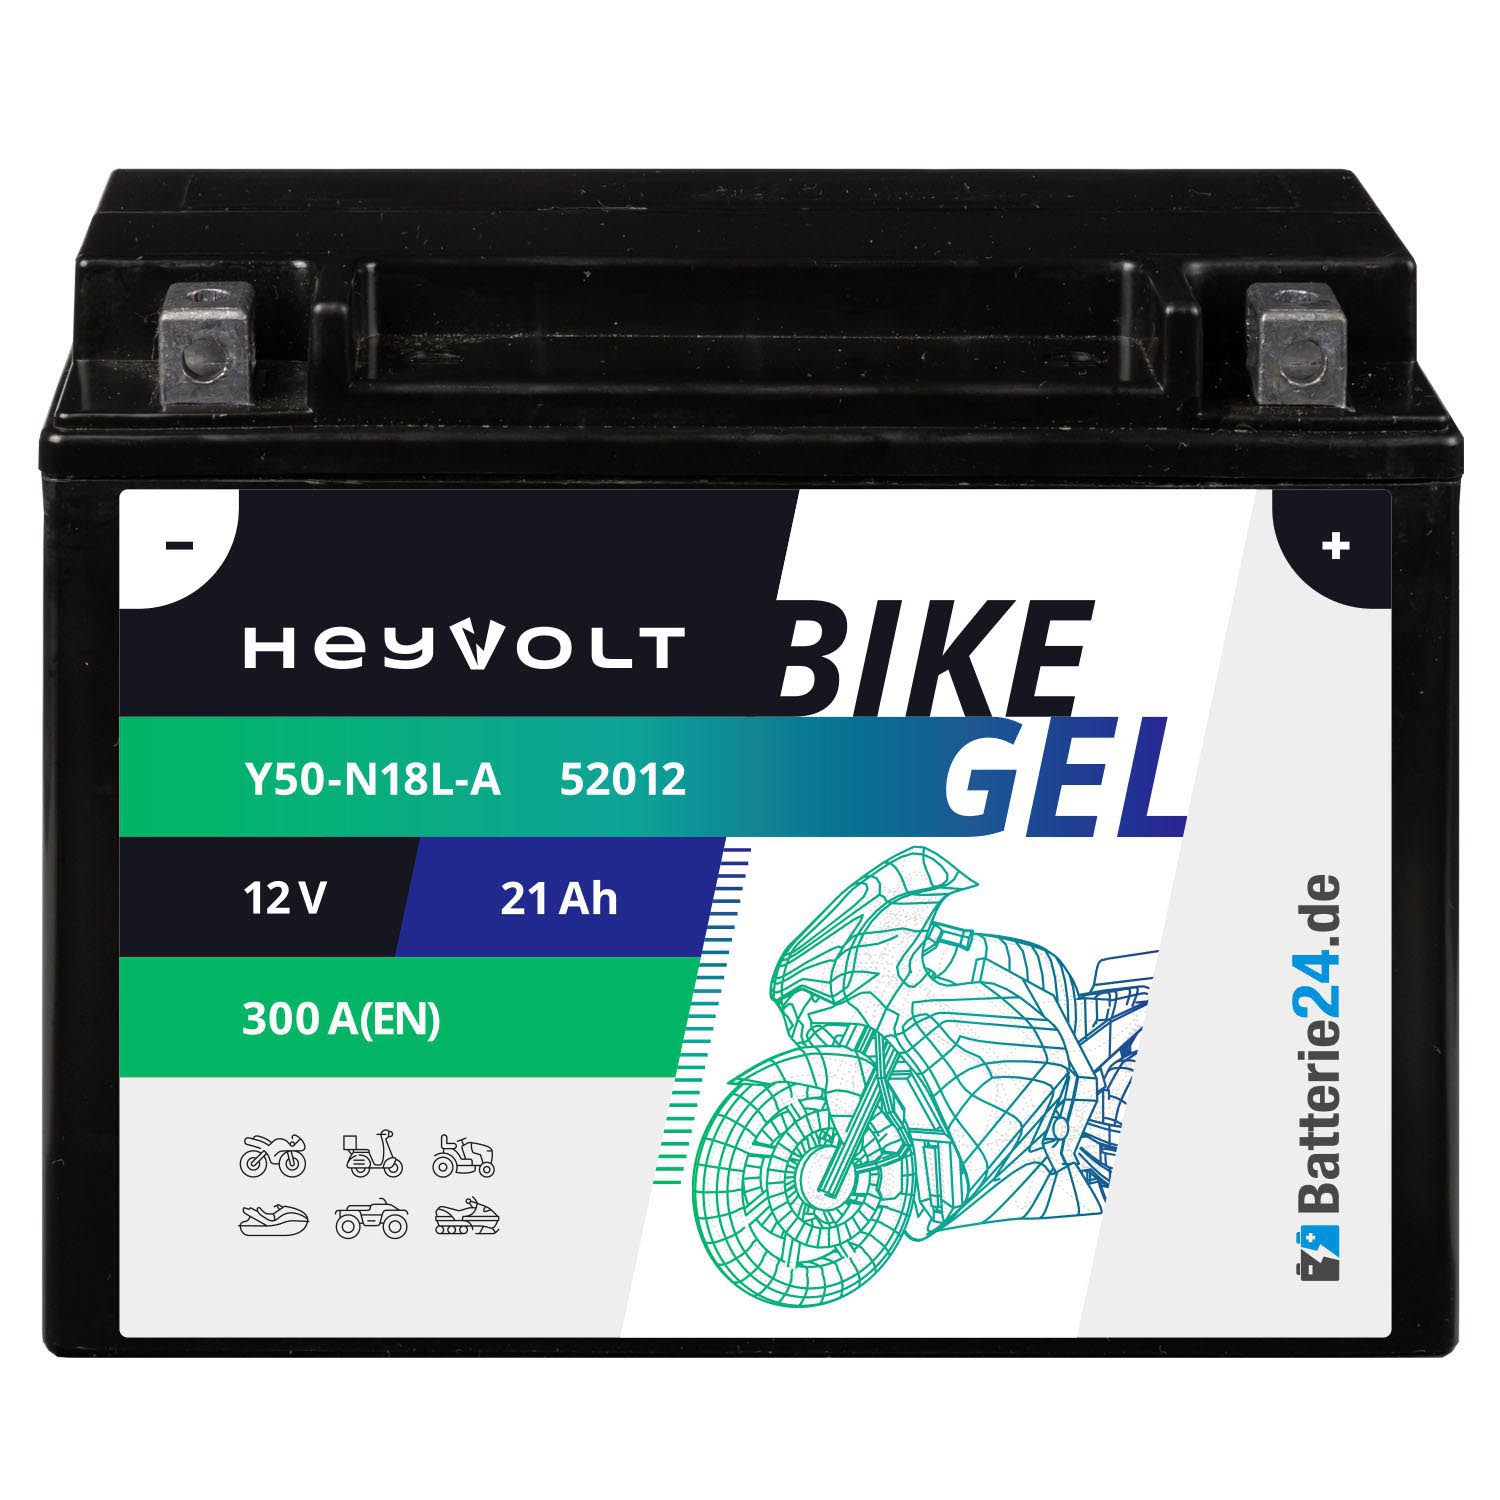 HeyVolt BIKE GEL Motorradbatterie Y50-N18L-A 52012 12V 21Ah